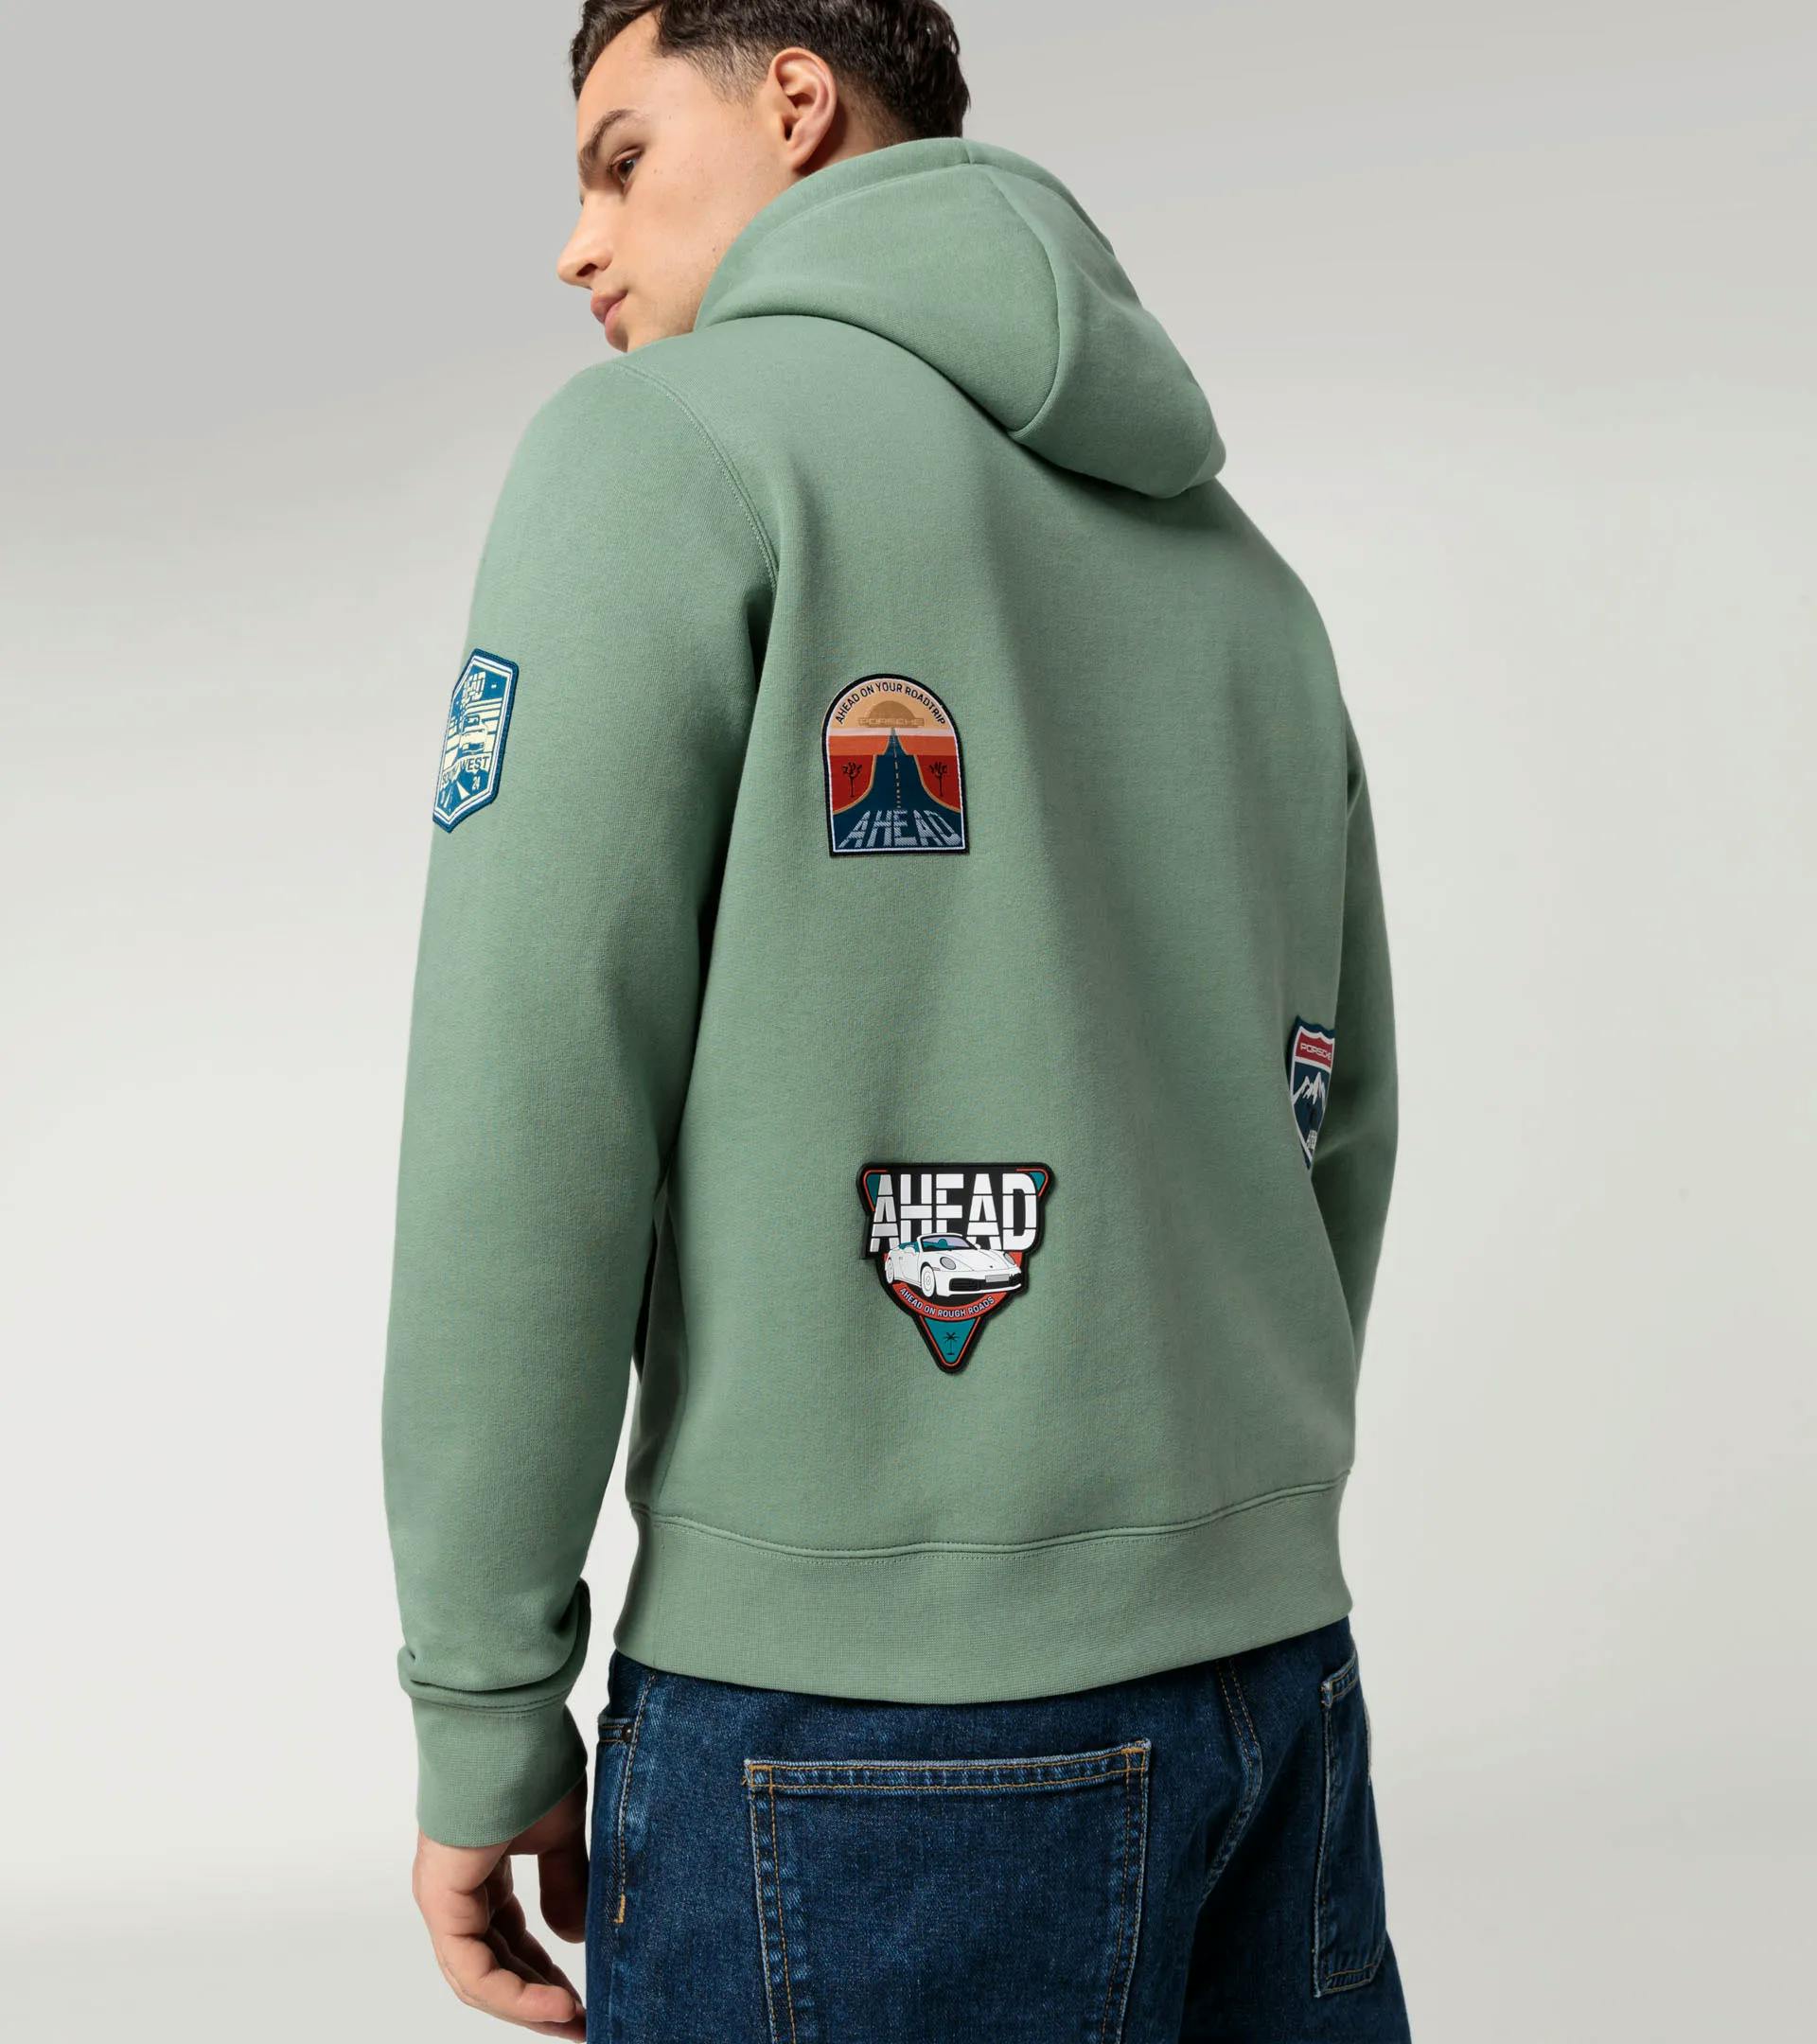 Collector's hoodie unisex AHEAD 4